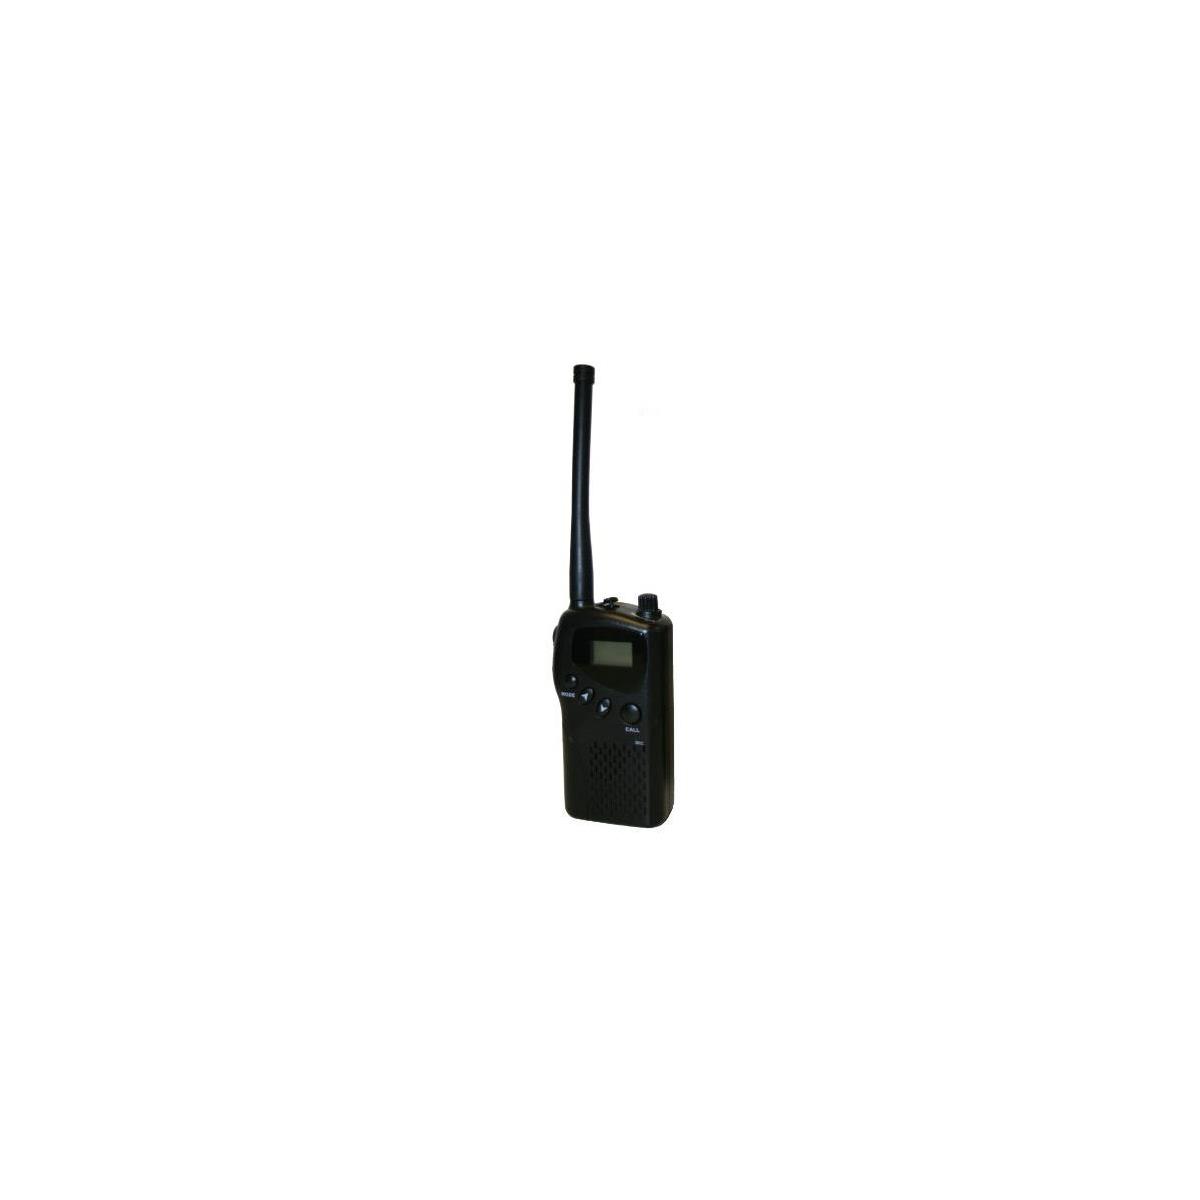 Image of AmpliVox SA6200 MURS (Multi-Use Radio Service) 5 Channels Two Way Radio